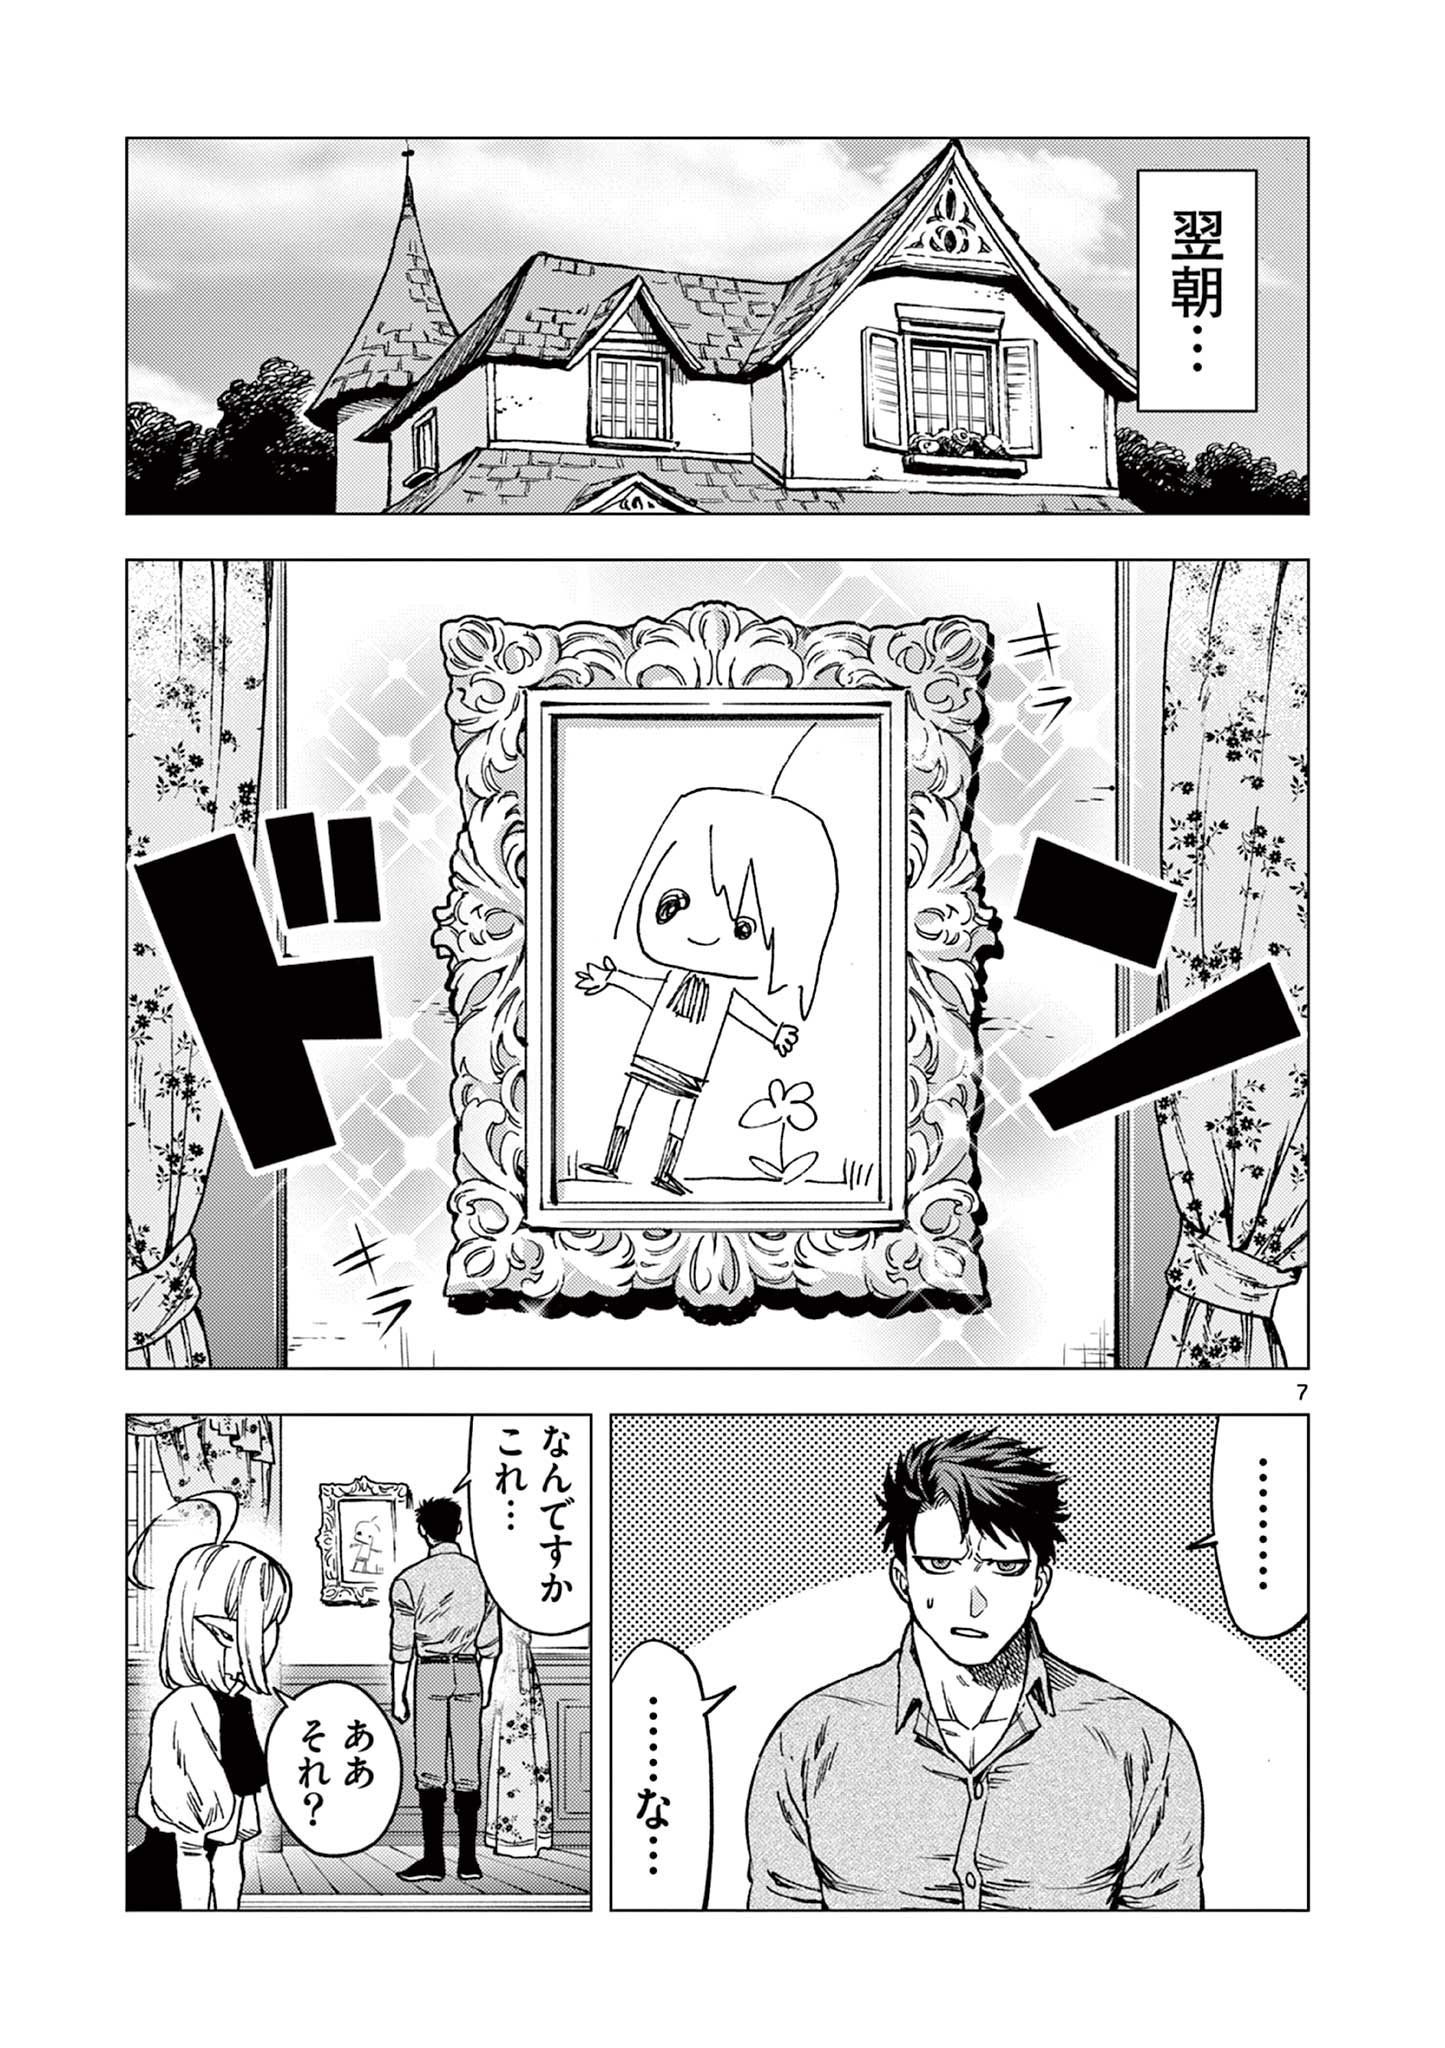 Raul to Kyuuketsuki - Chapter 2 - Page 7